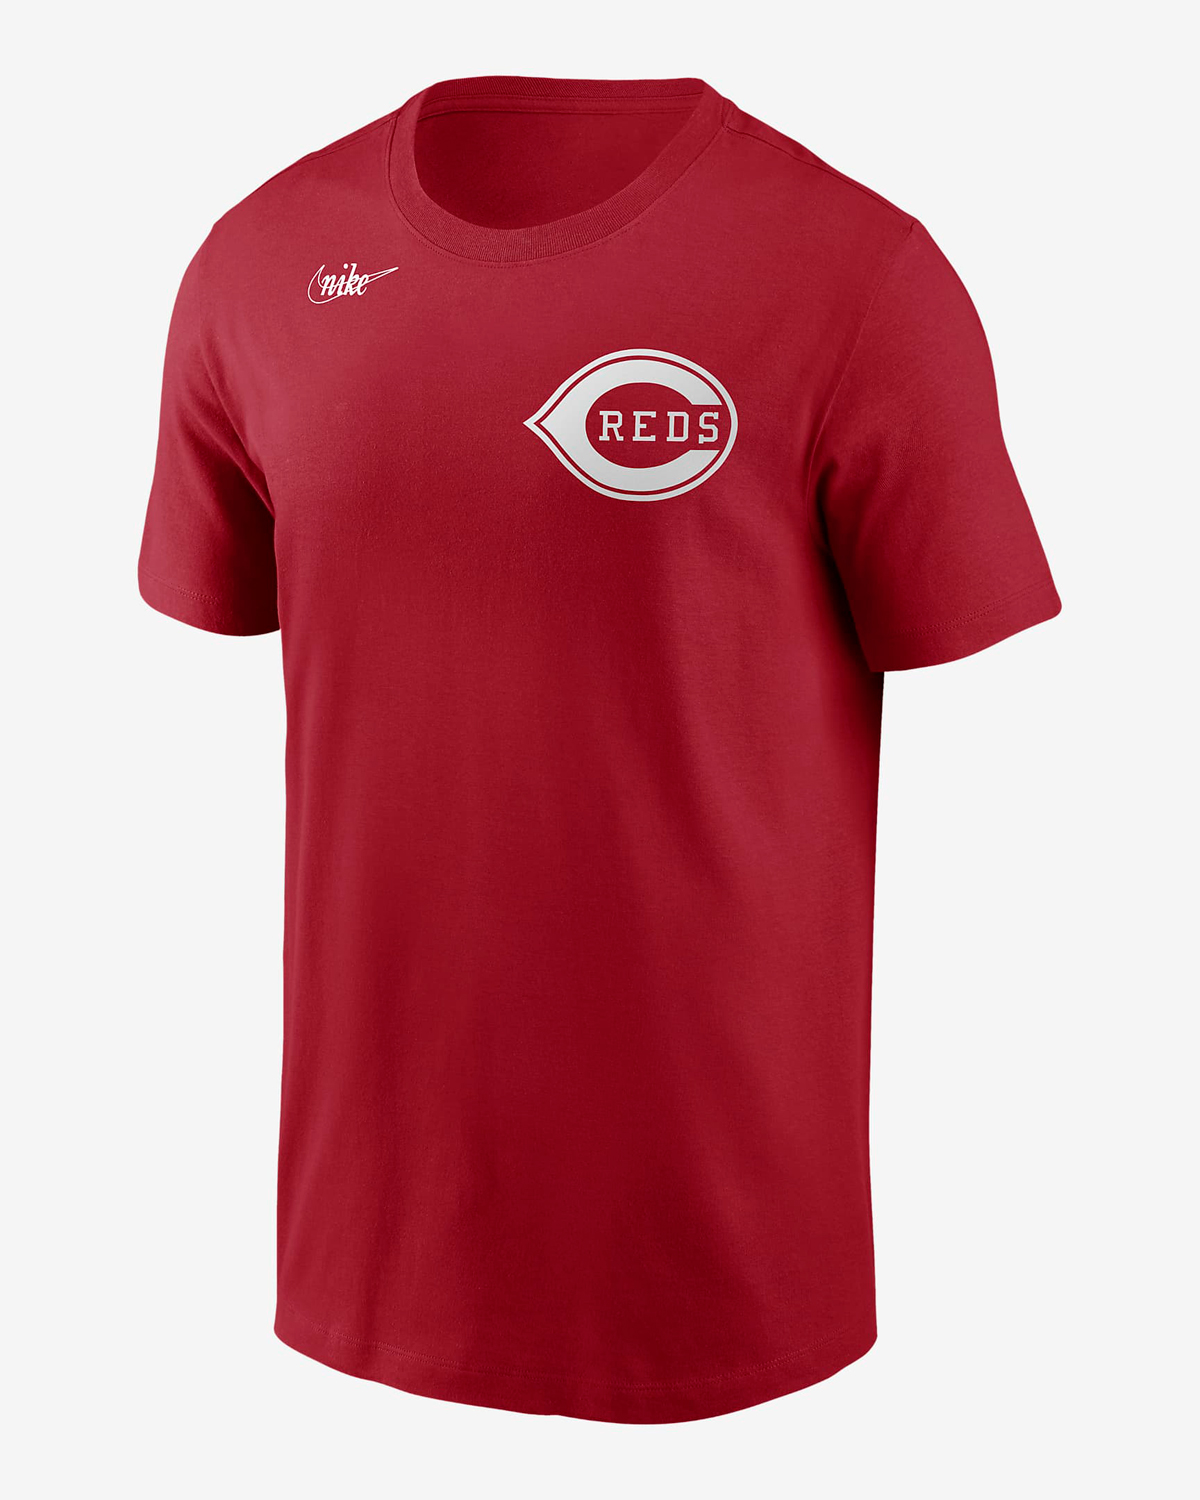 Nike-Air-Griffey-Max-1-Cincinnati-Red-Shirt-1